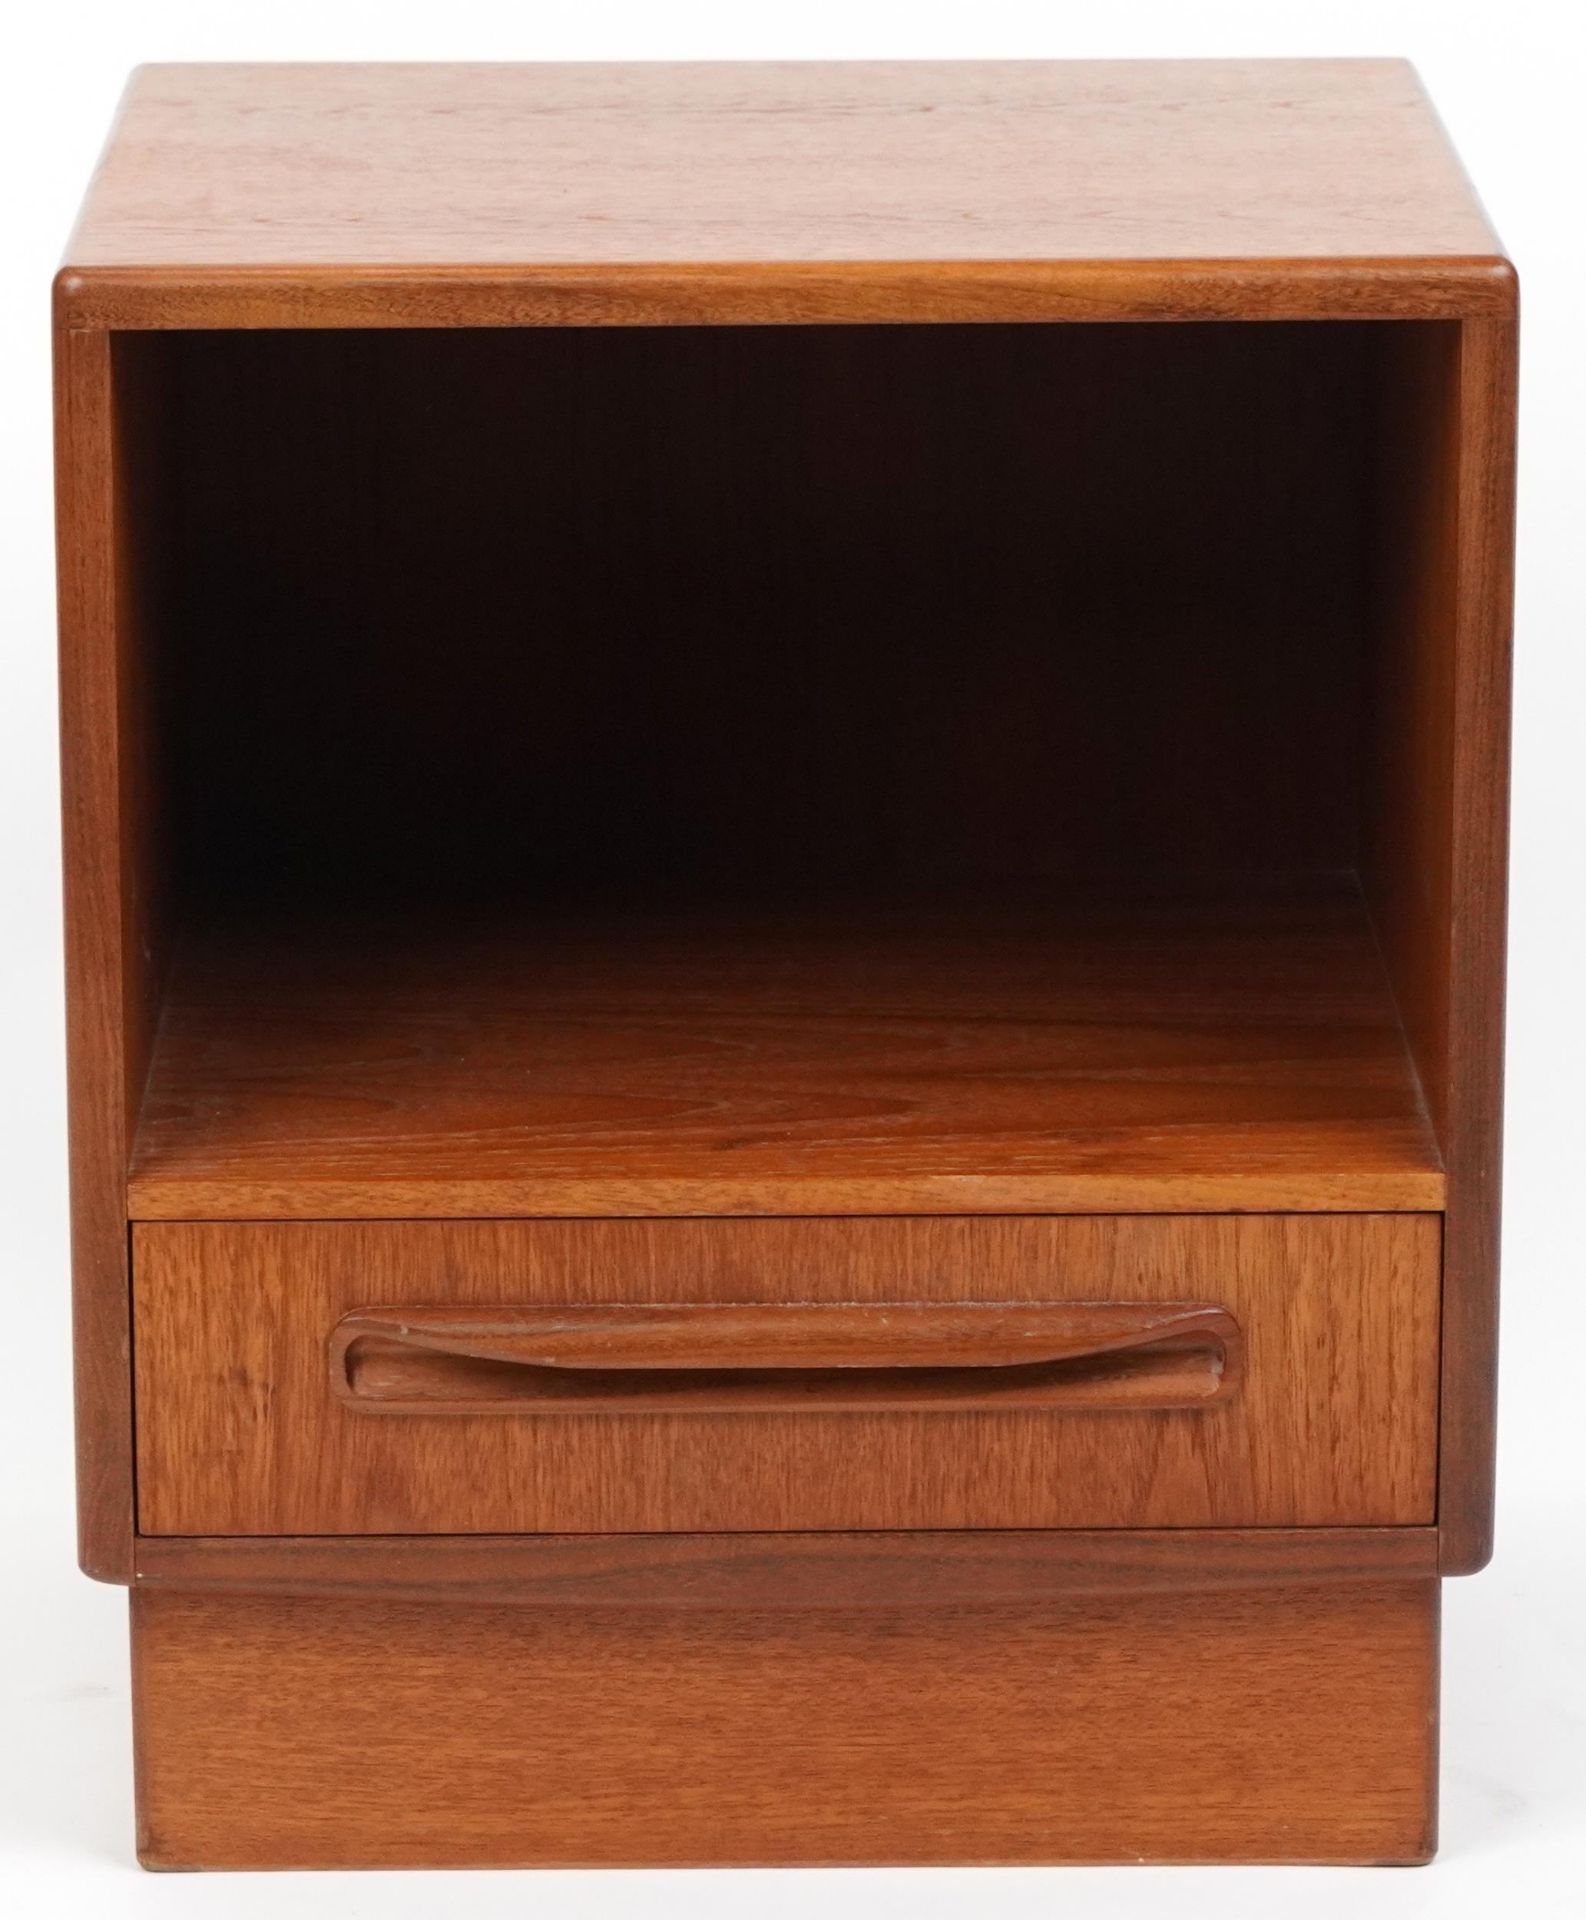 G Plan, Mid century Fresco teak nightstand with base drawer, 54cm H x 46cm W x 41cm D - Image 2 of 6